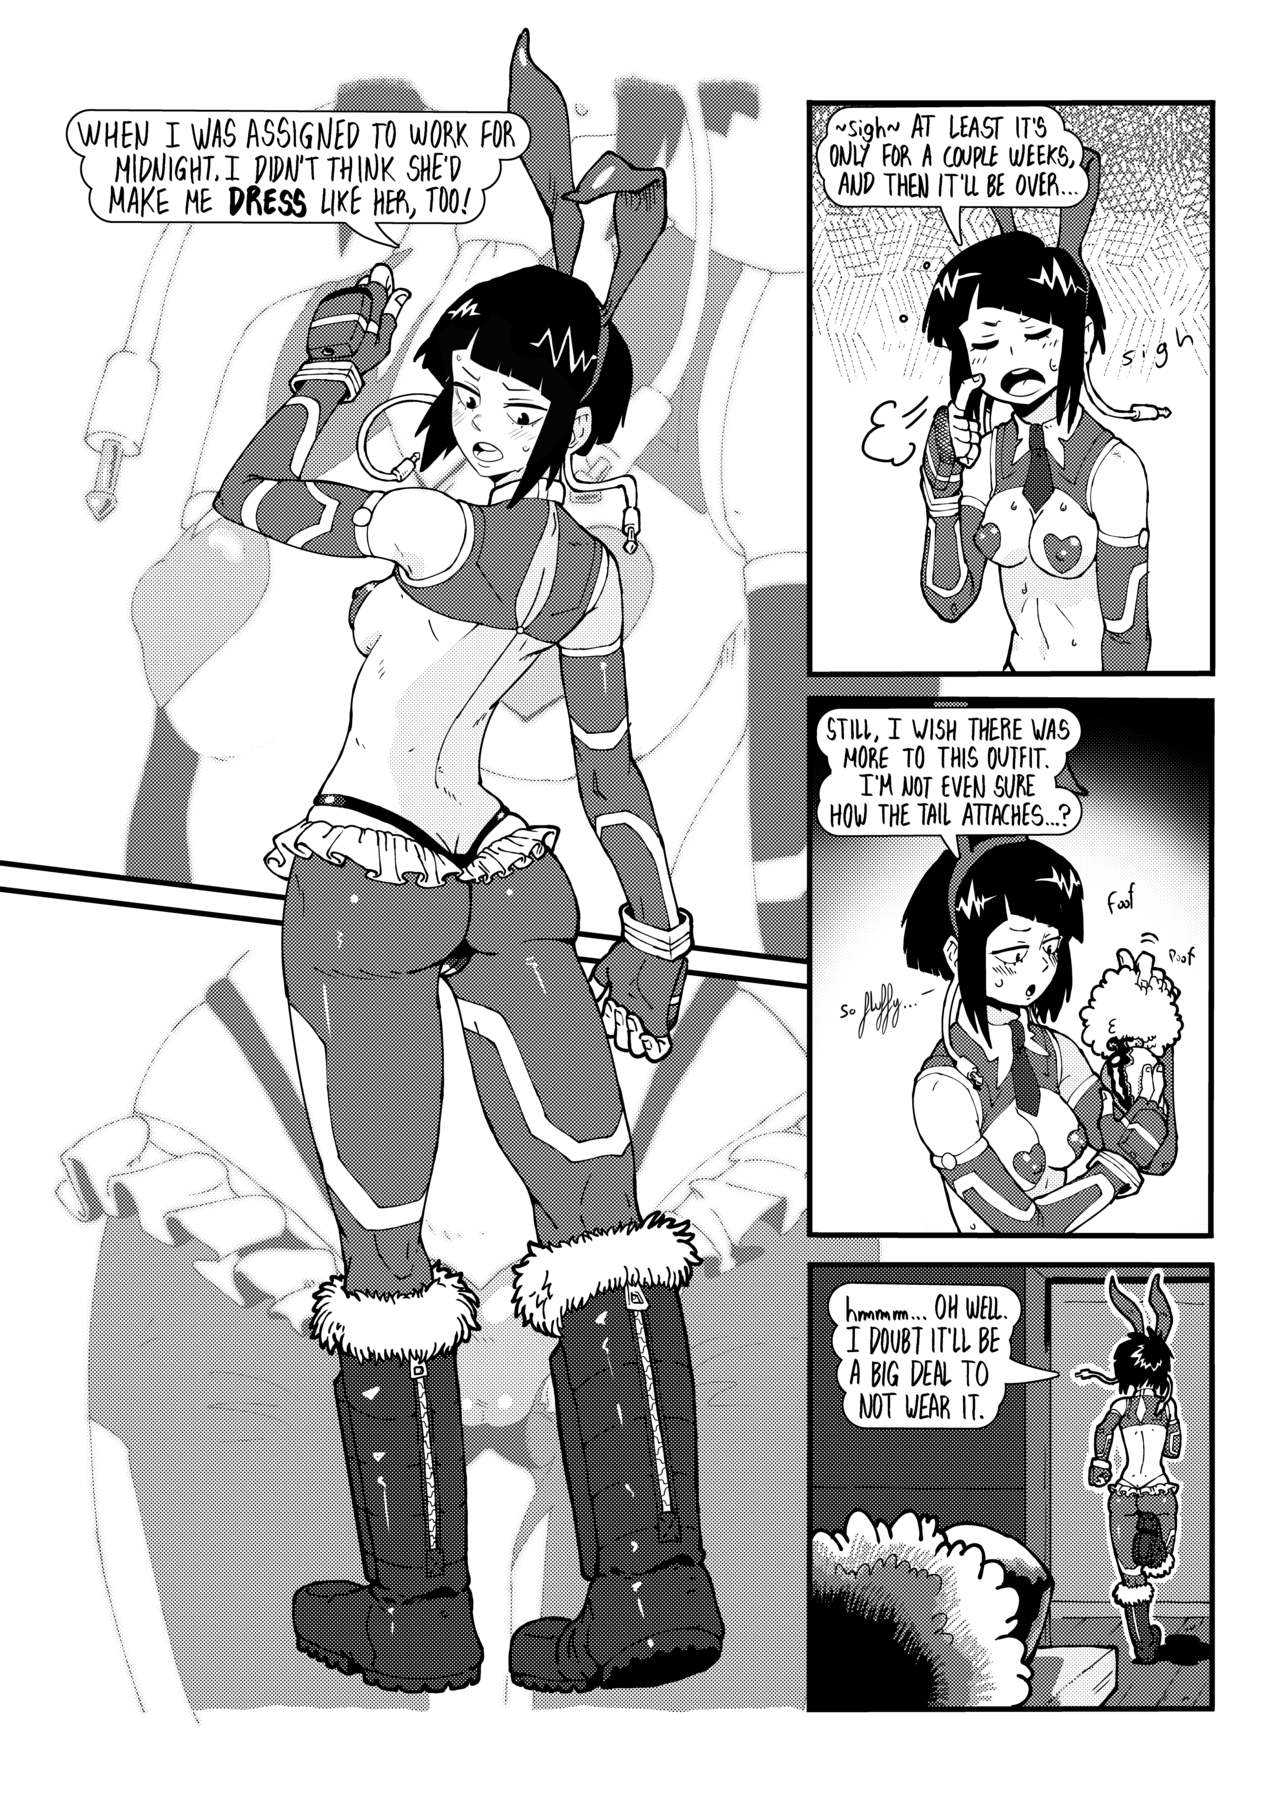 Kyouka jirou porn comics